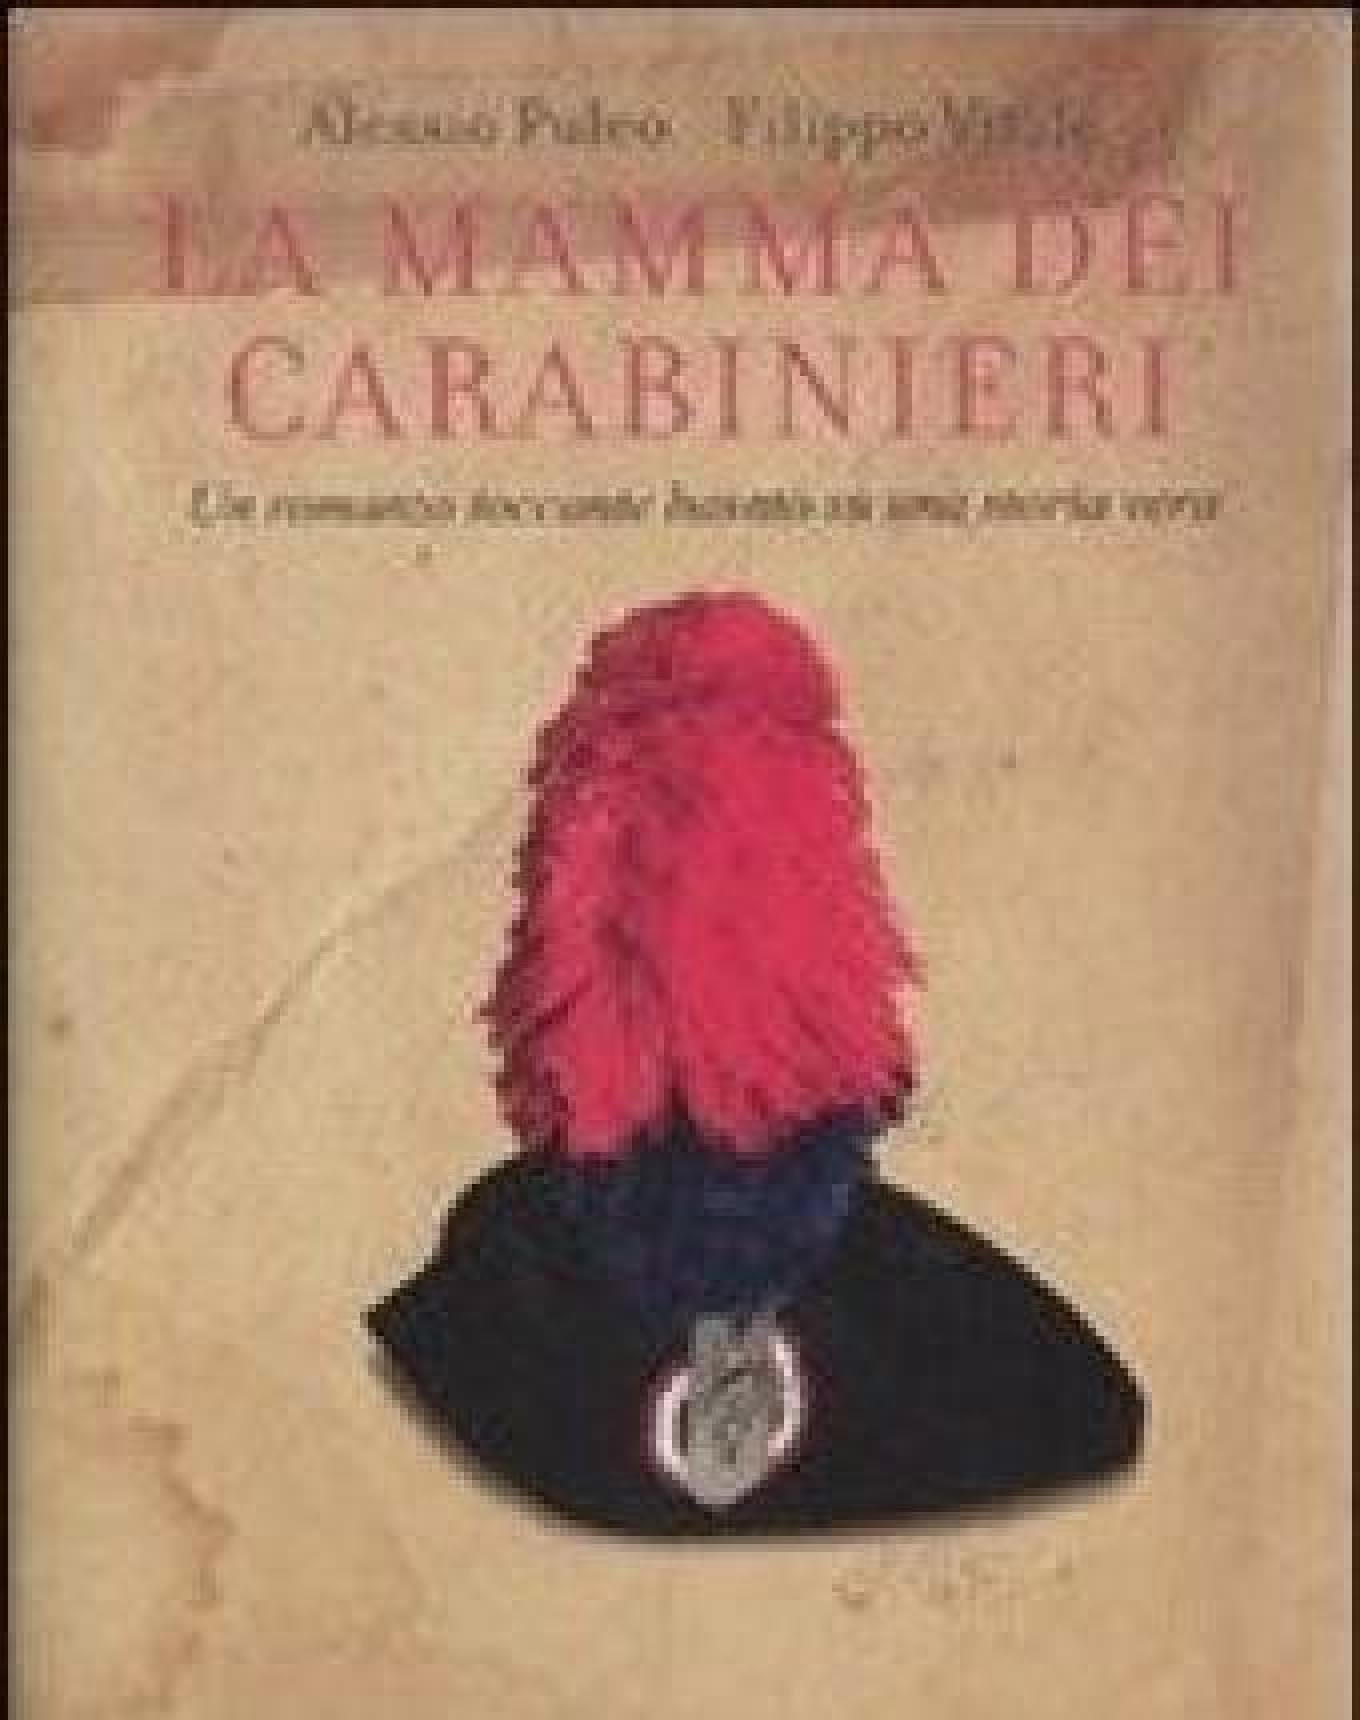 La Mamma Dei Carabinieri